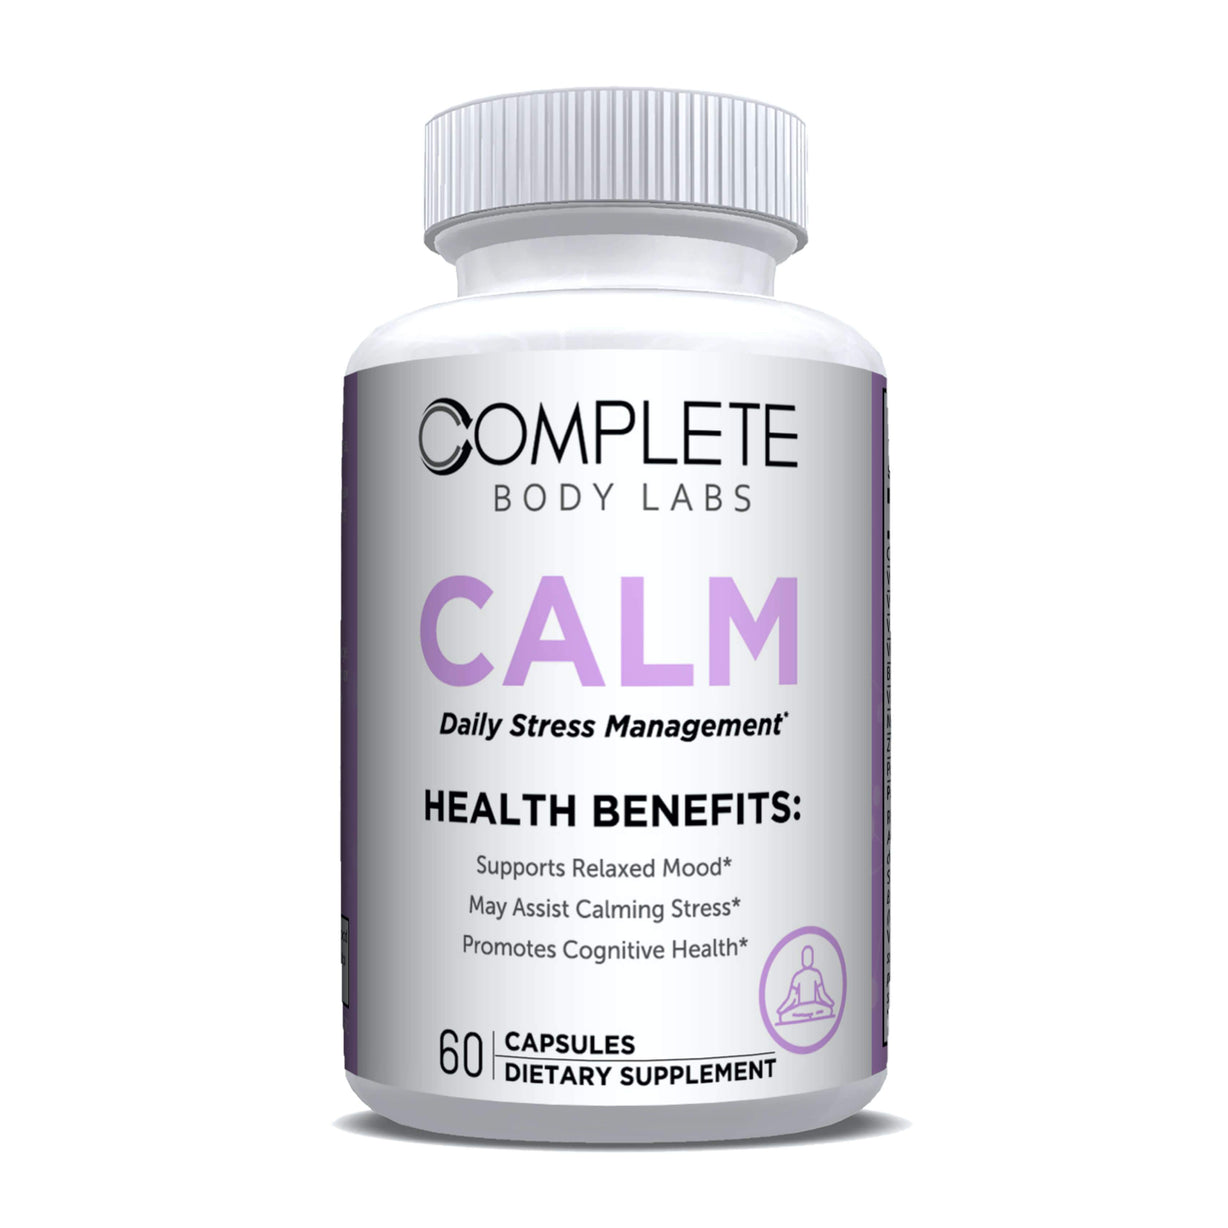 CALM Complete Body Labs | Probiotics, Nootropics, Brain Supplements, Protein Bars, Workout Supplements, Health Supplements, Omega-3 & Essential Vitamins For Men & Women